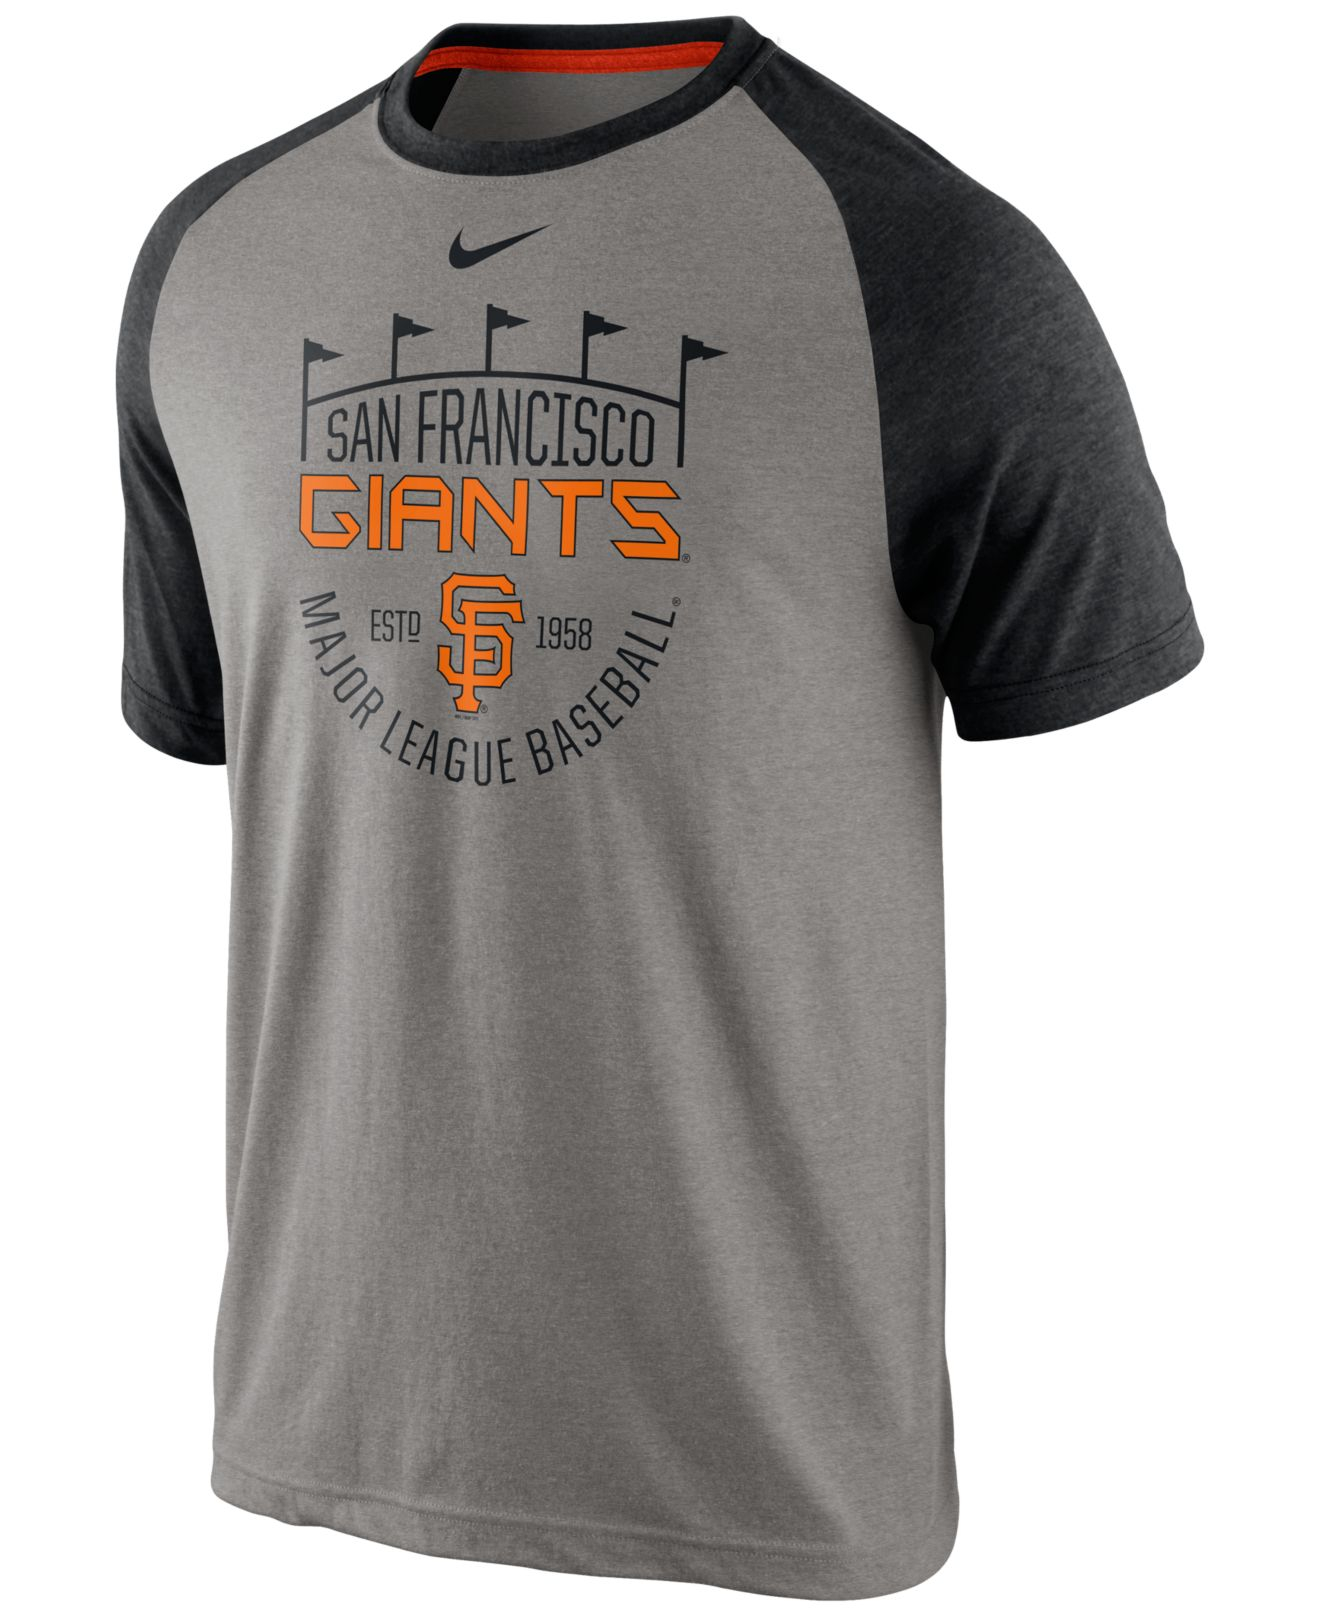 Lyst - Nike Men'S San Francisco Giants Raglan T-Shirt in Gray for Men